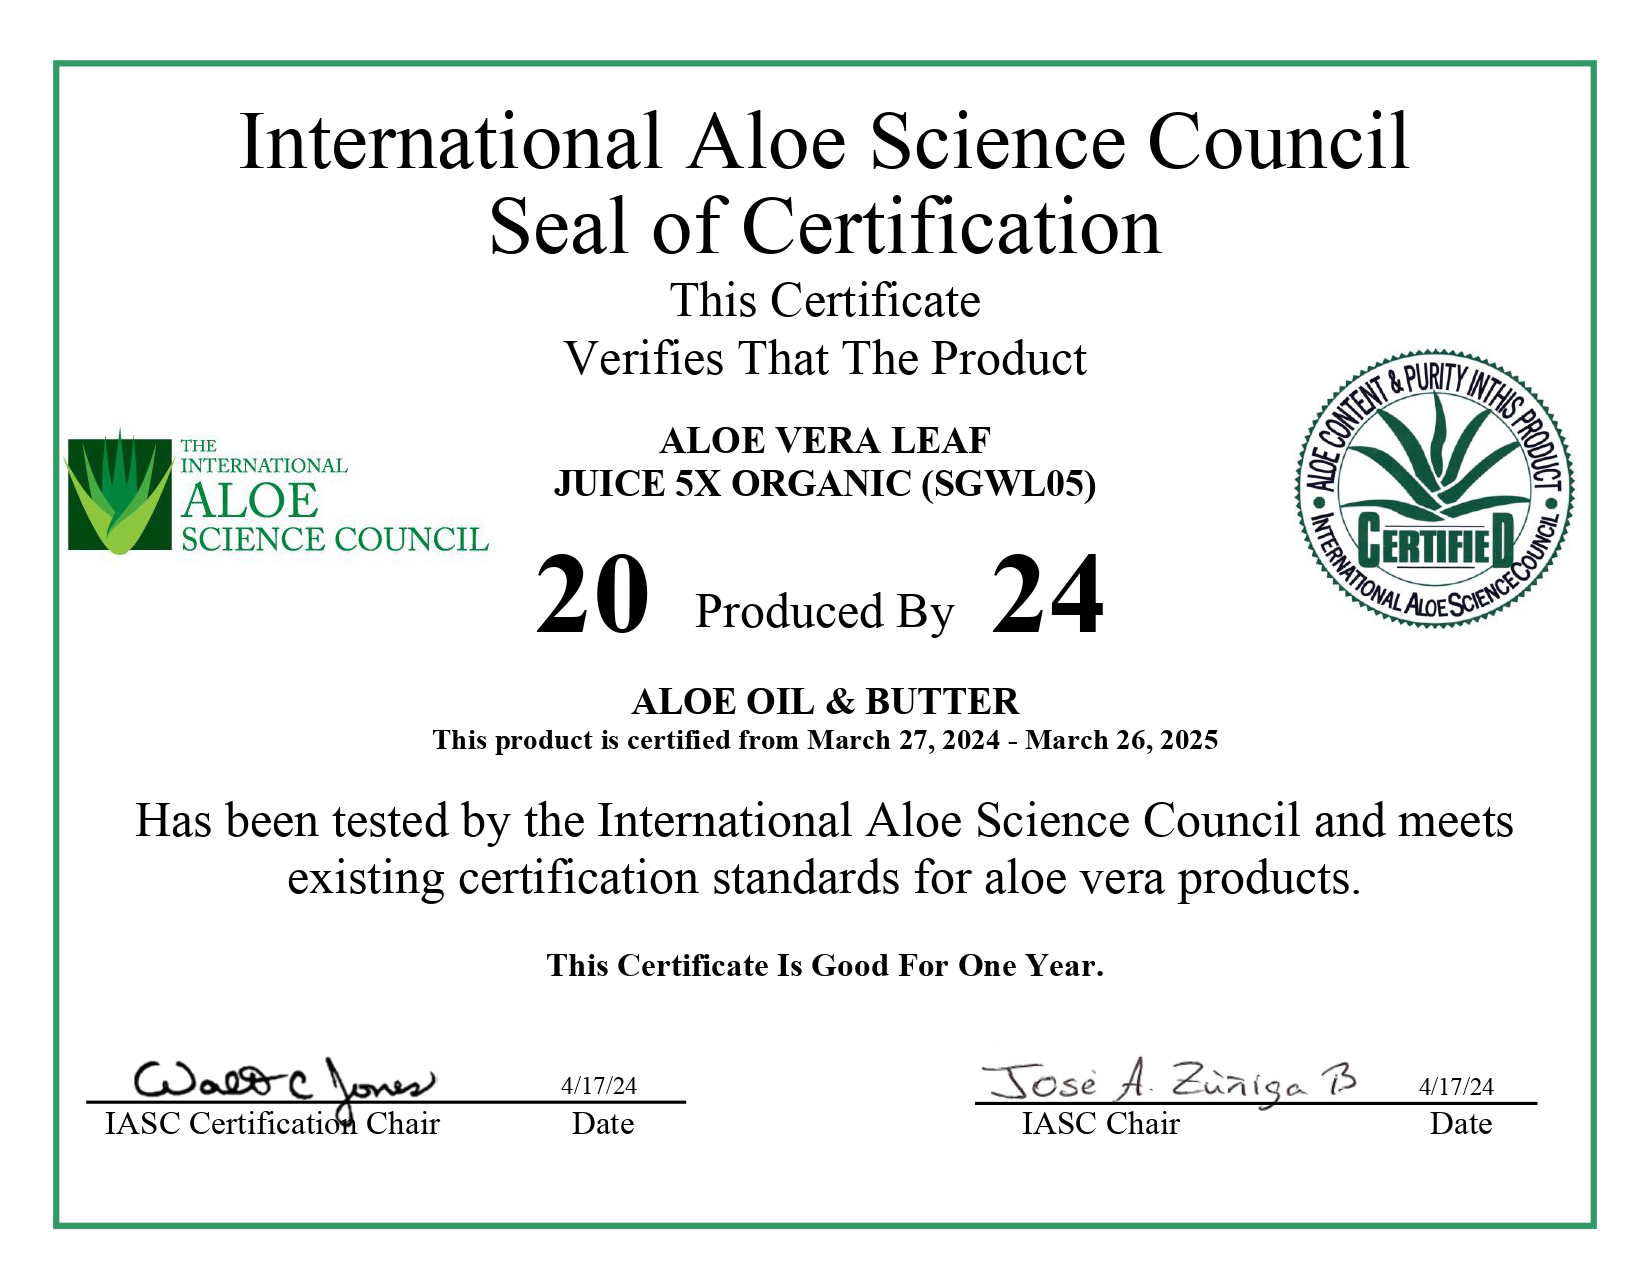 International Aloe Science Council Certification for Aloe Vera Leaf Juice 5X